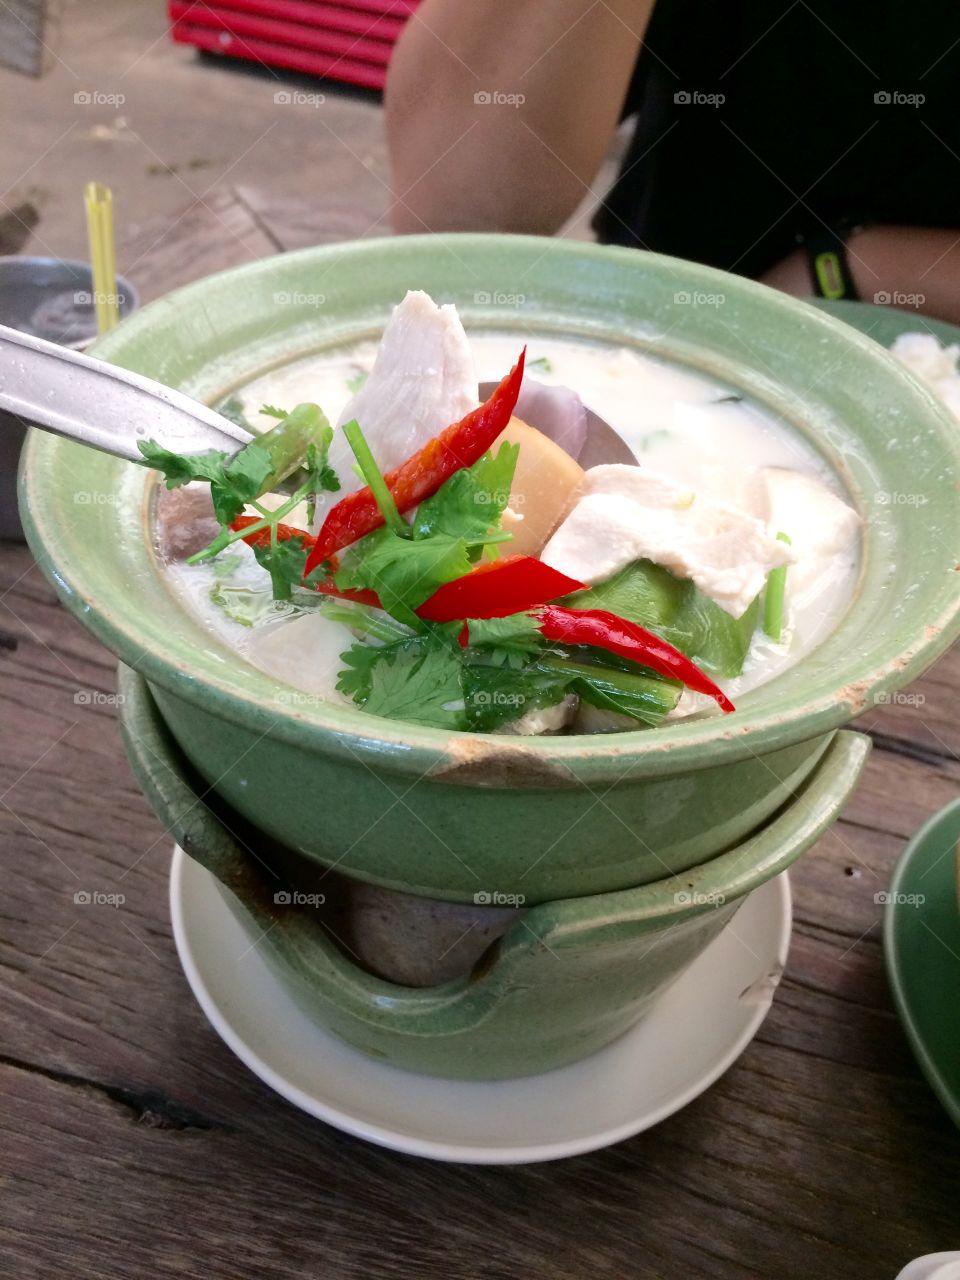 Tumyumgai,Thaifood